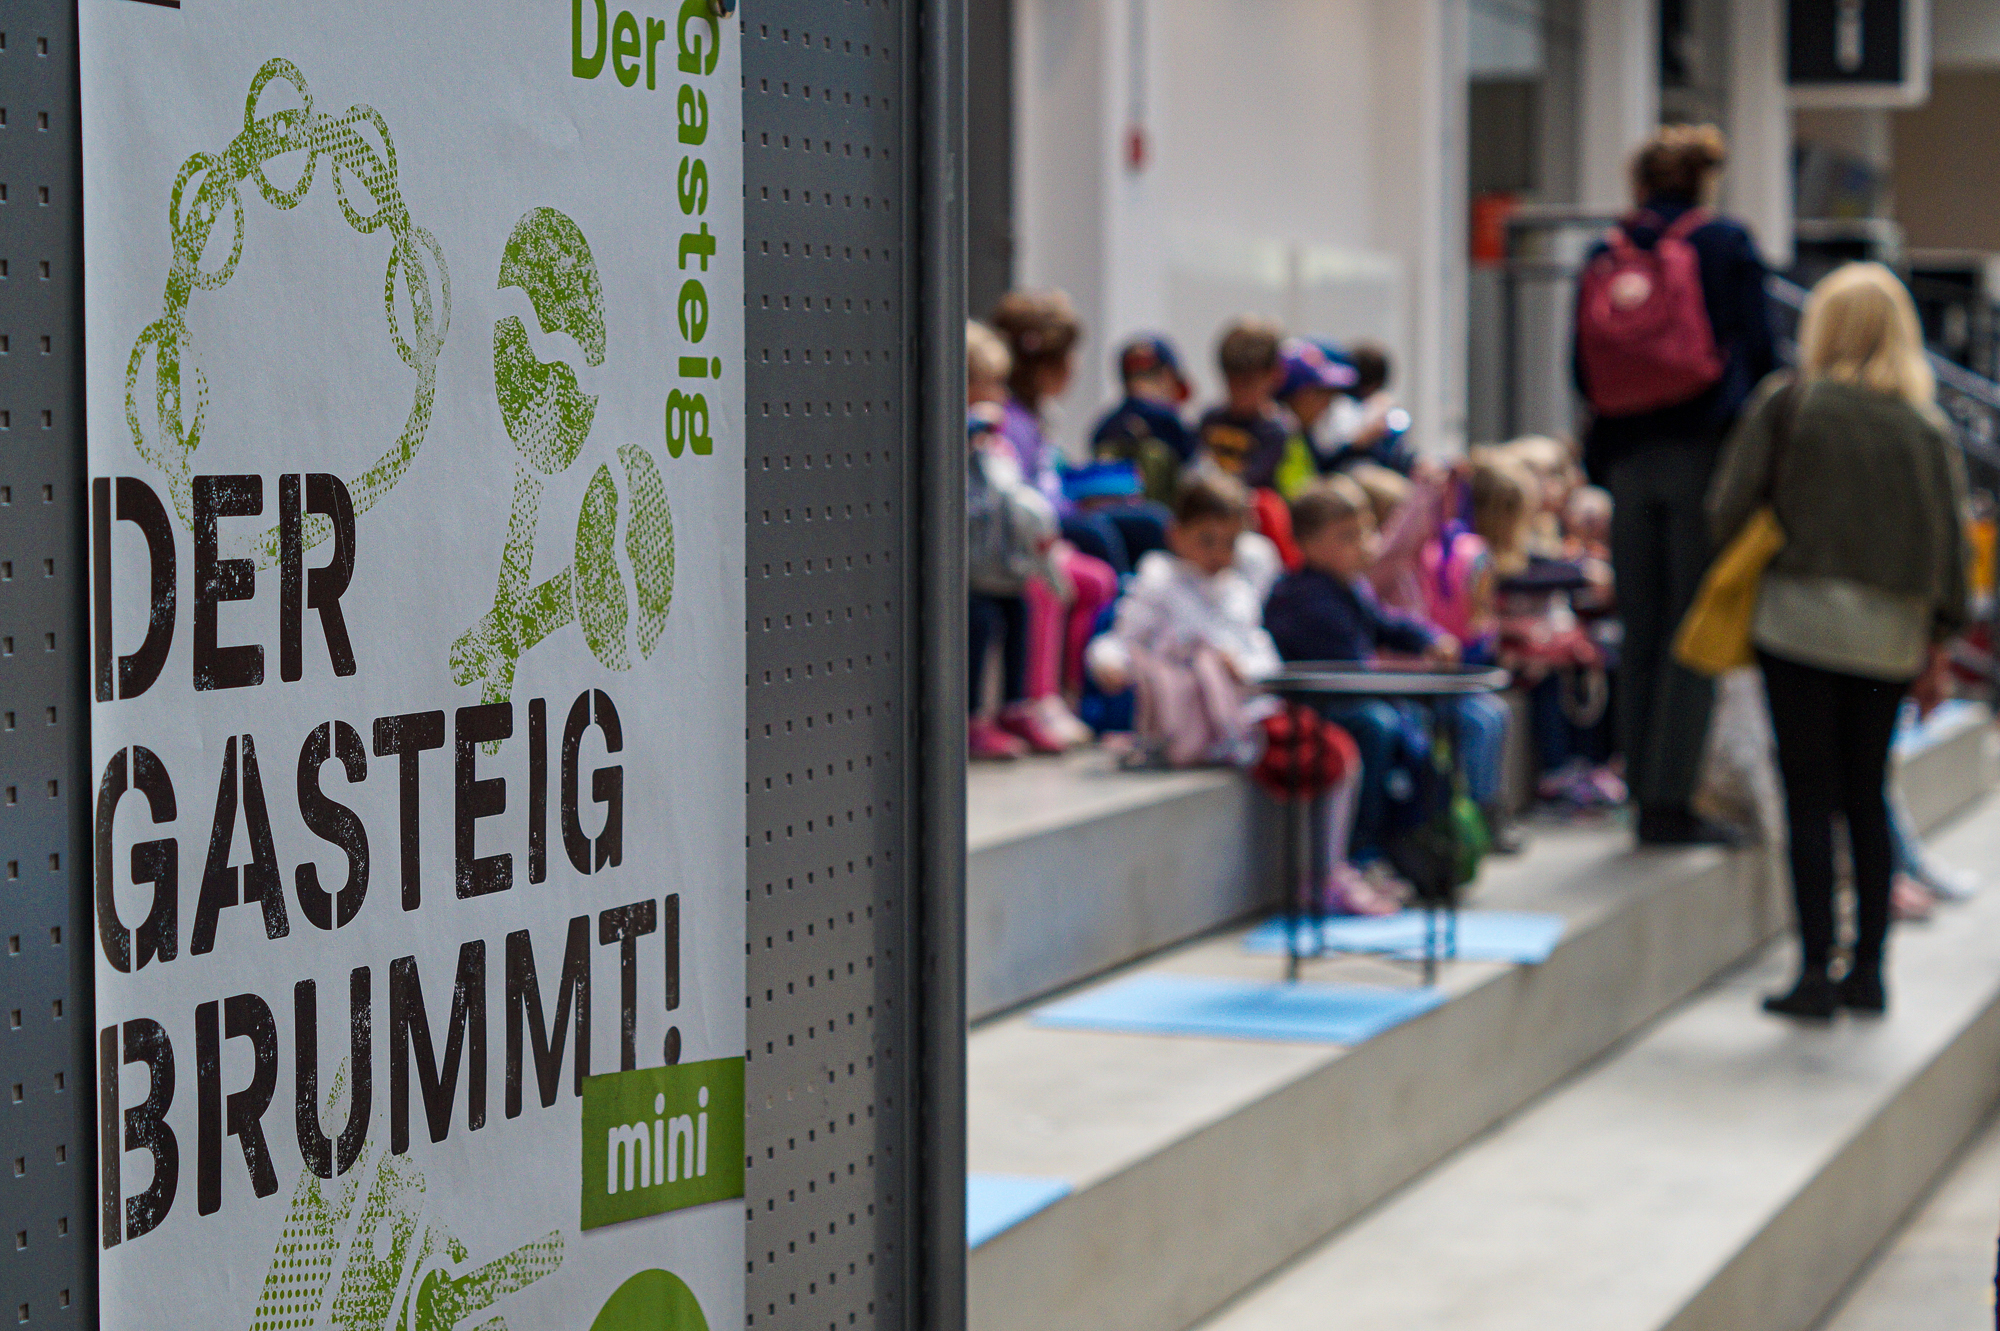 Children wait in Hall E next to the poster for "Der Gasteig brummt!"